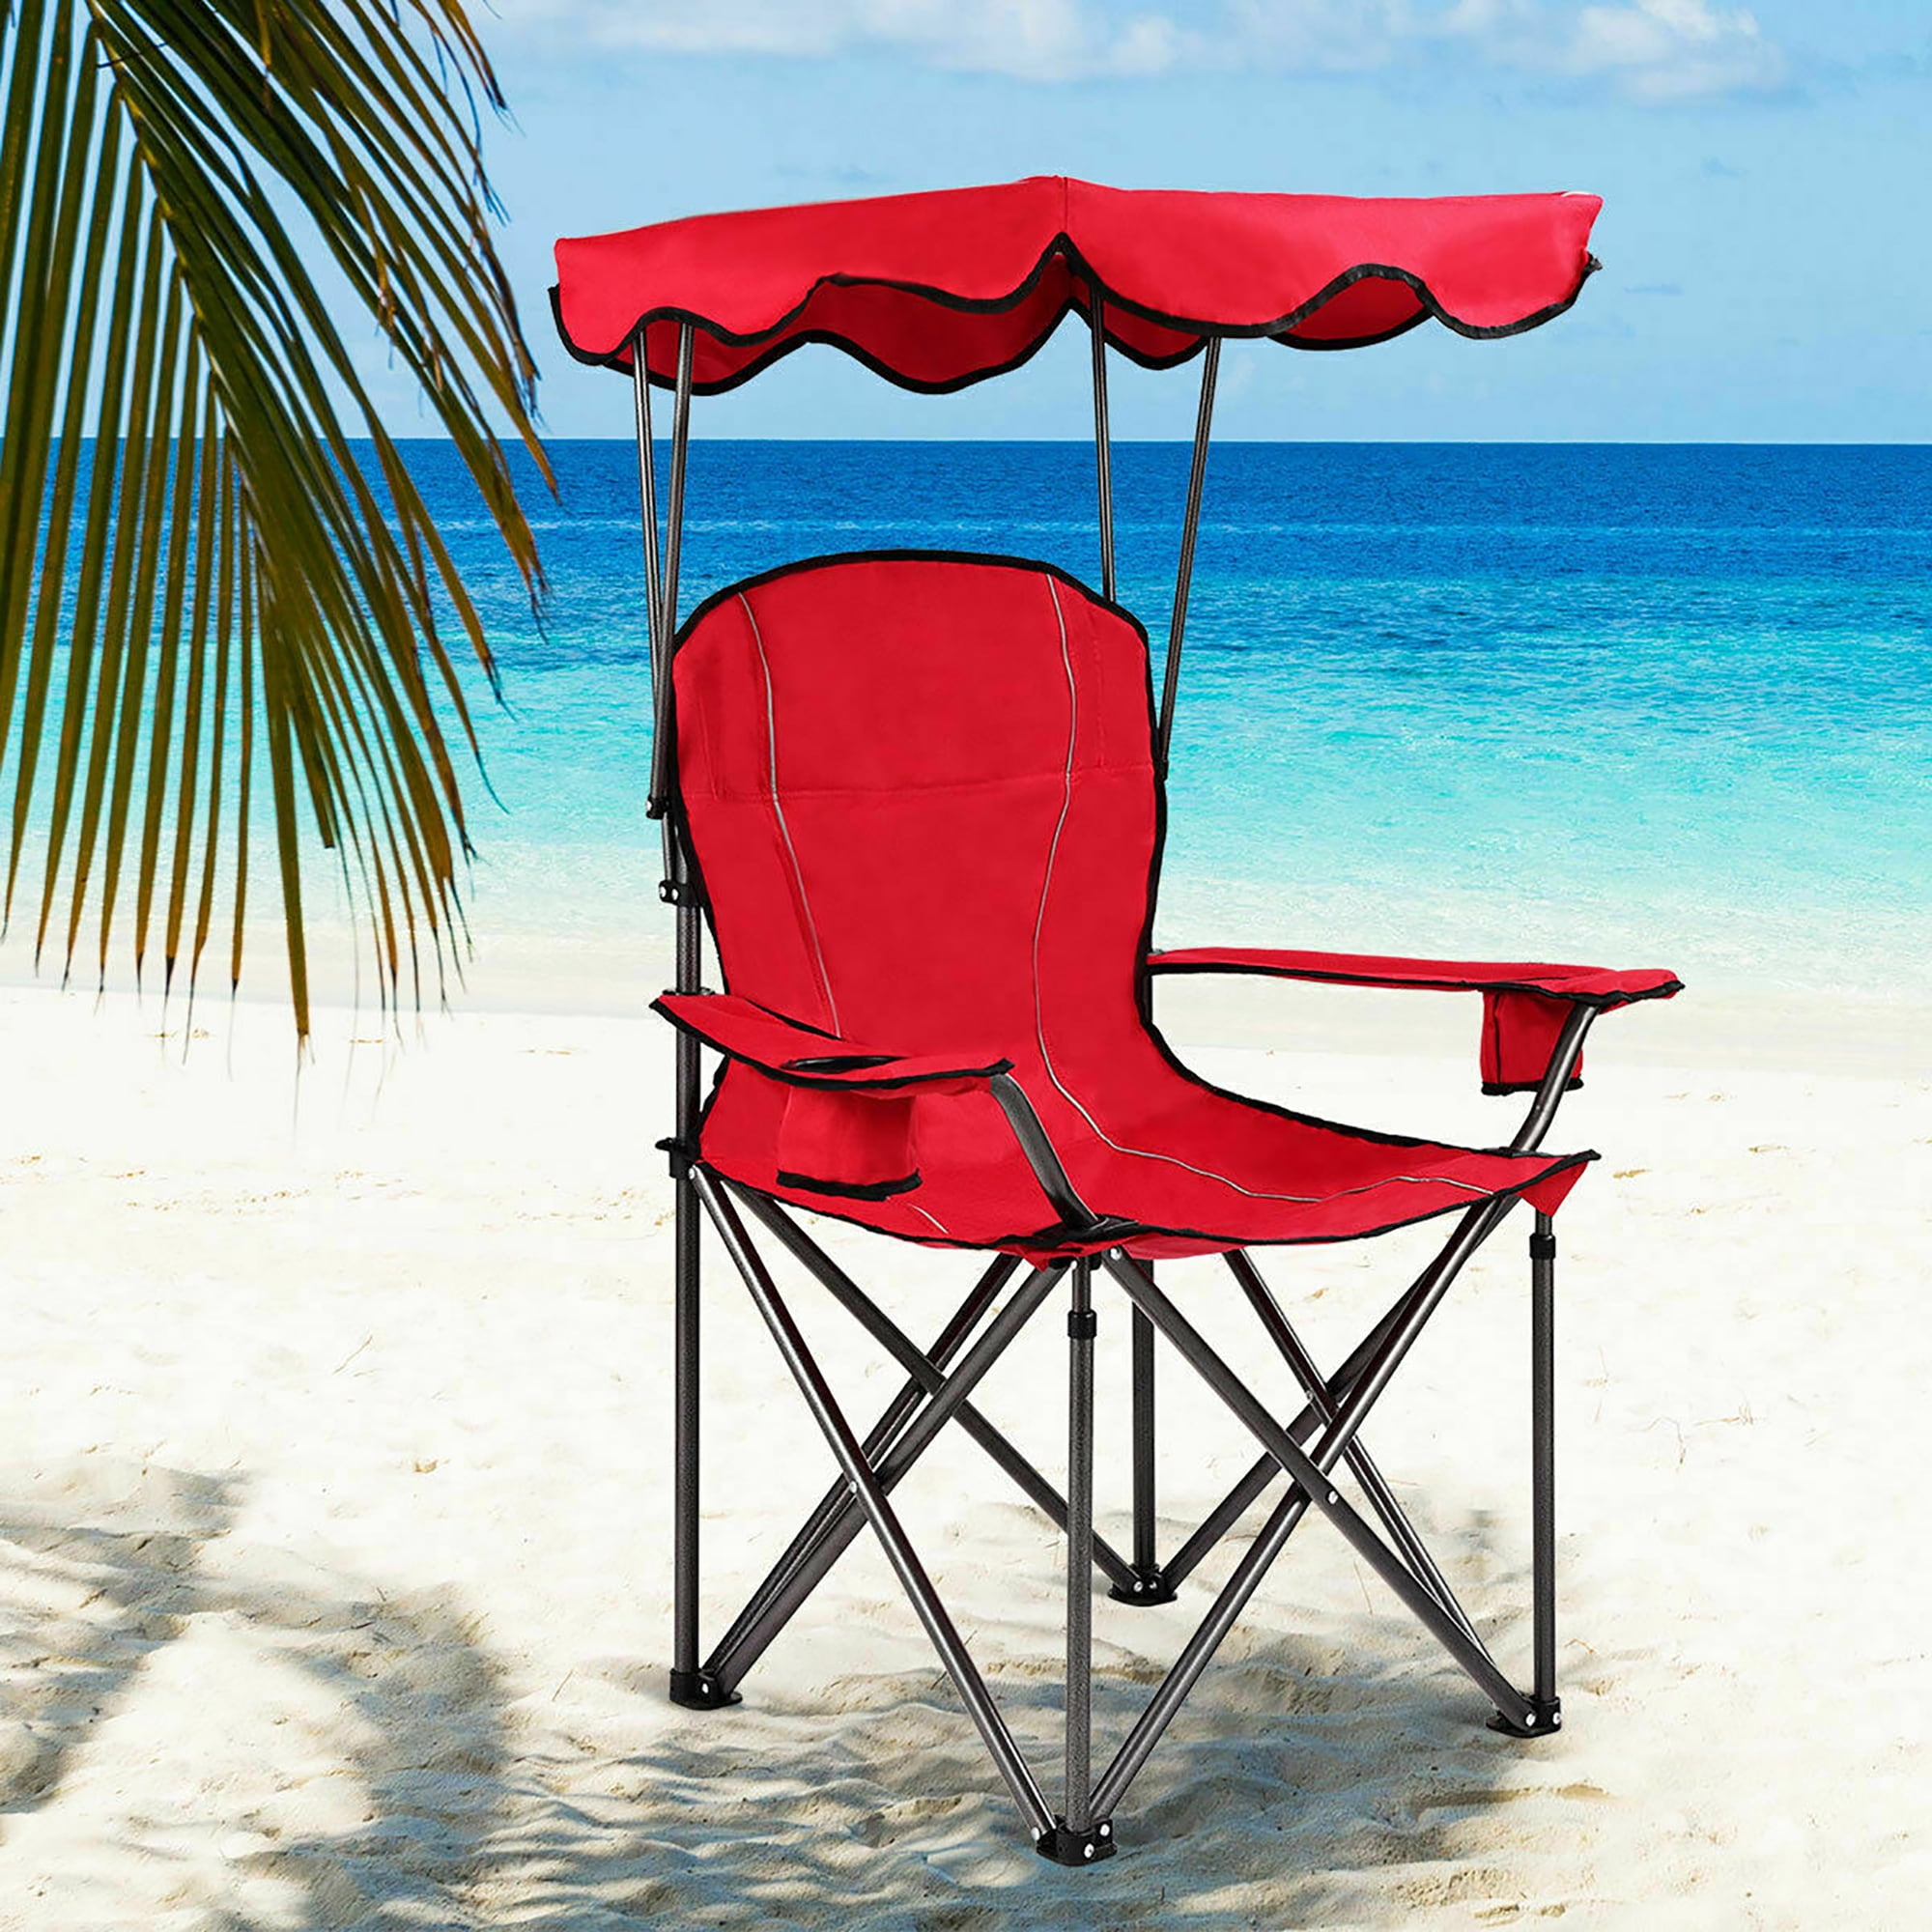 beach chair with canopy